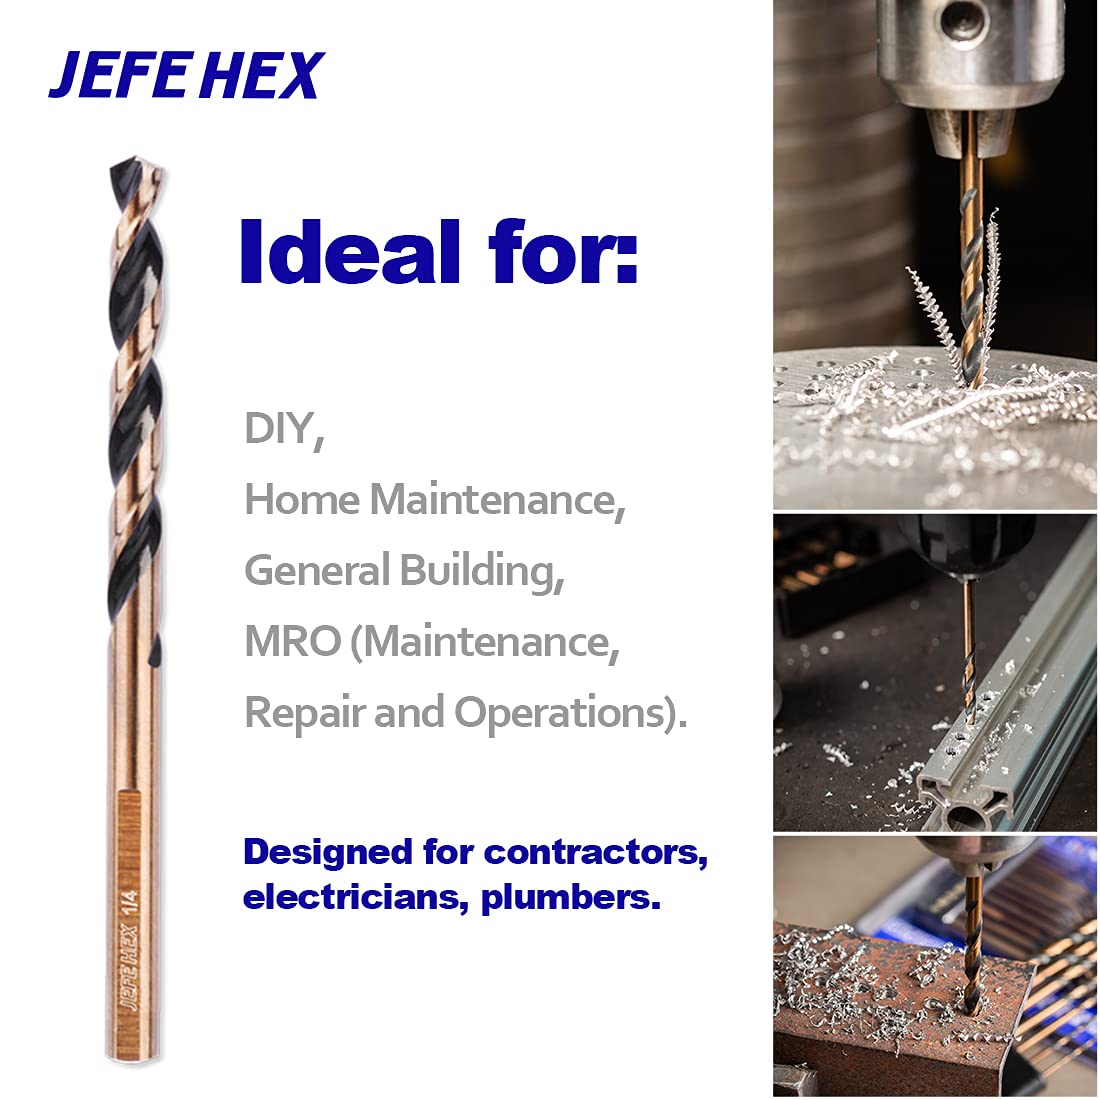 JEFE HEX Drill Bit Set- HSS Jobber Drill Bits, 3-Flat Shank, Black and